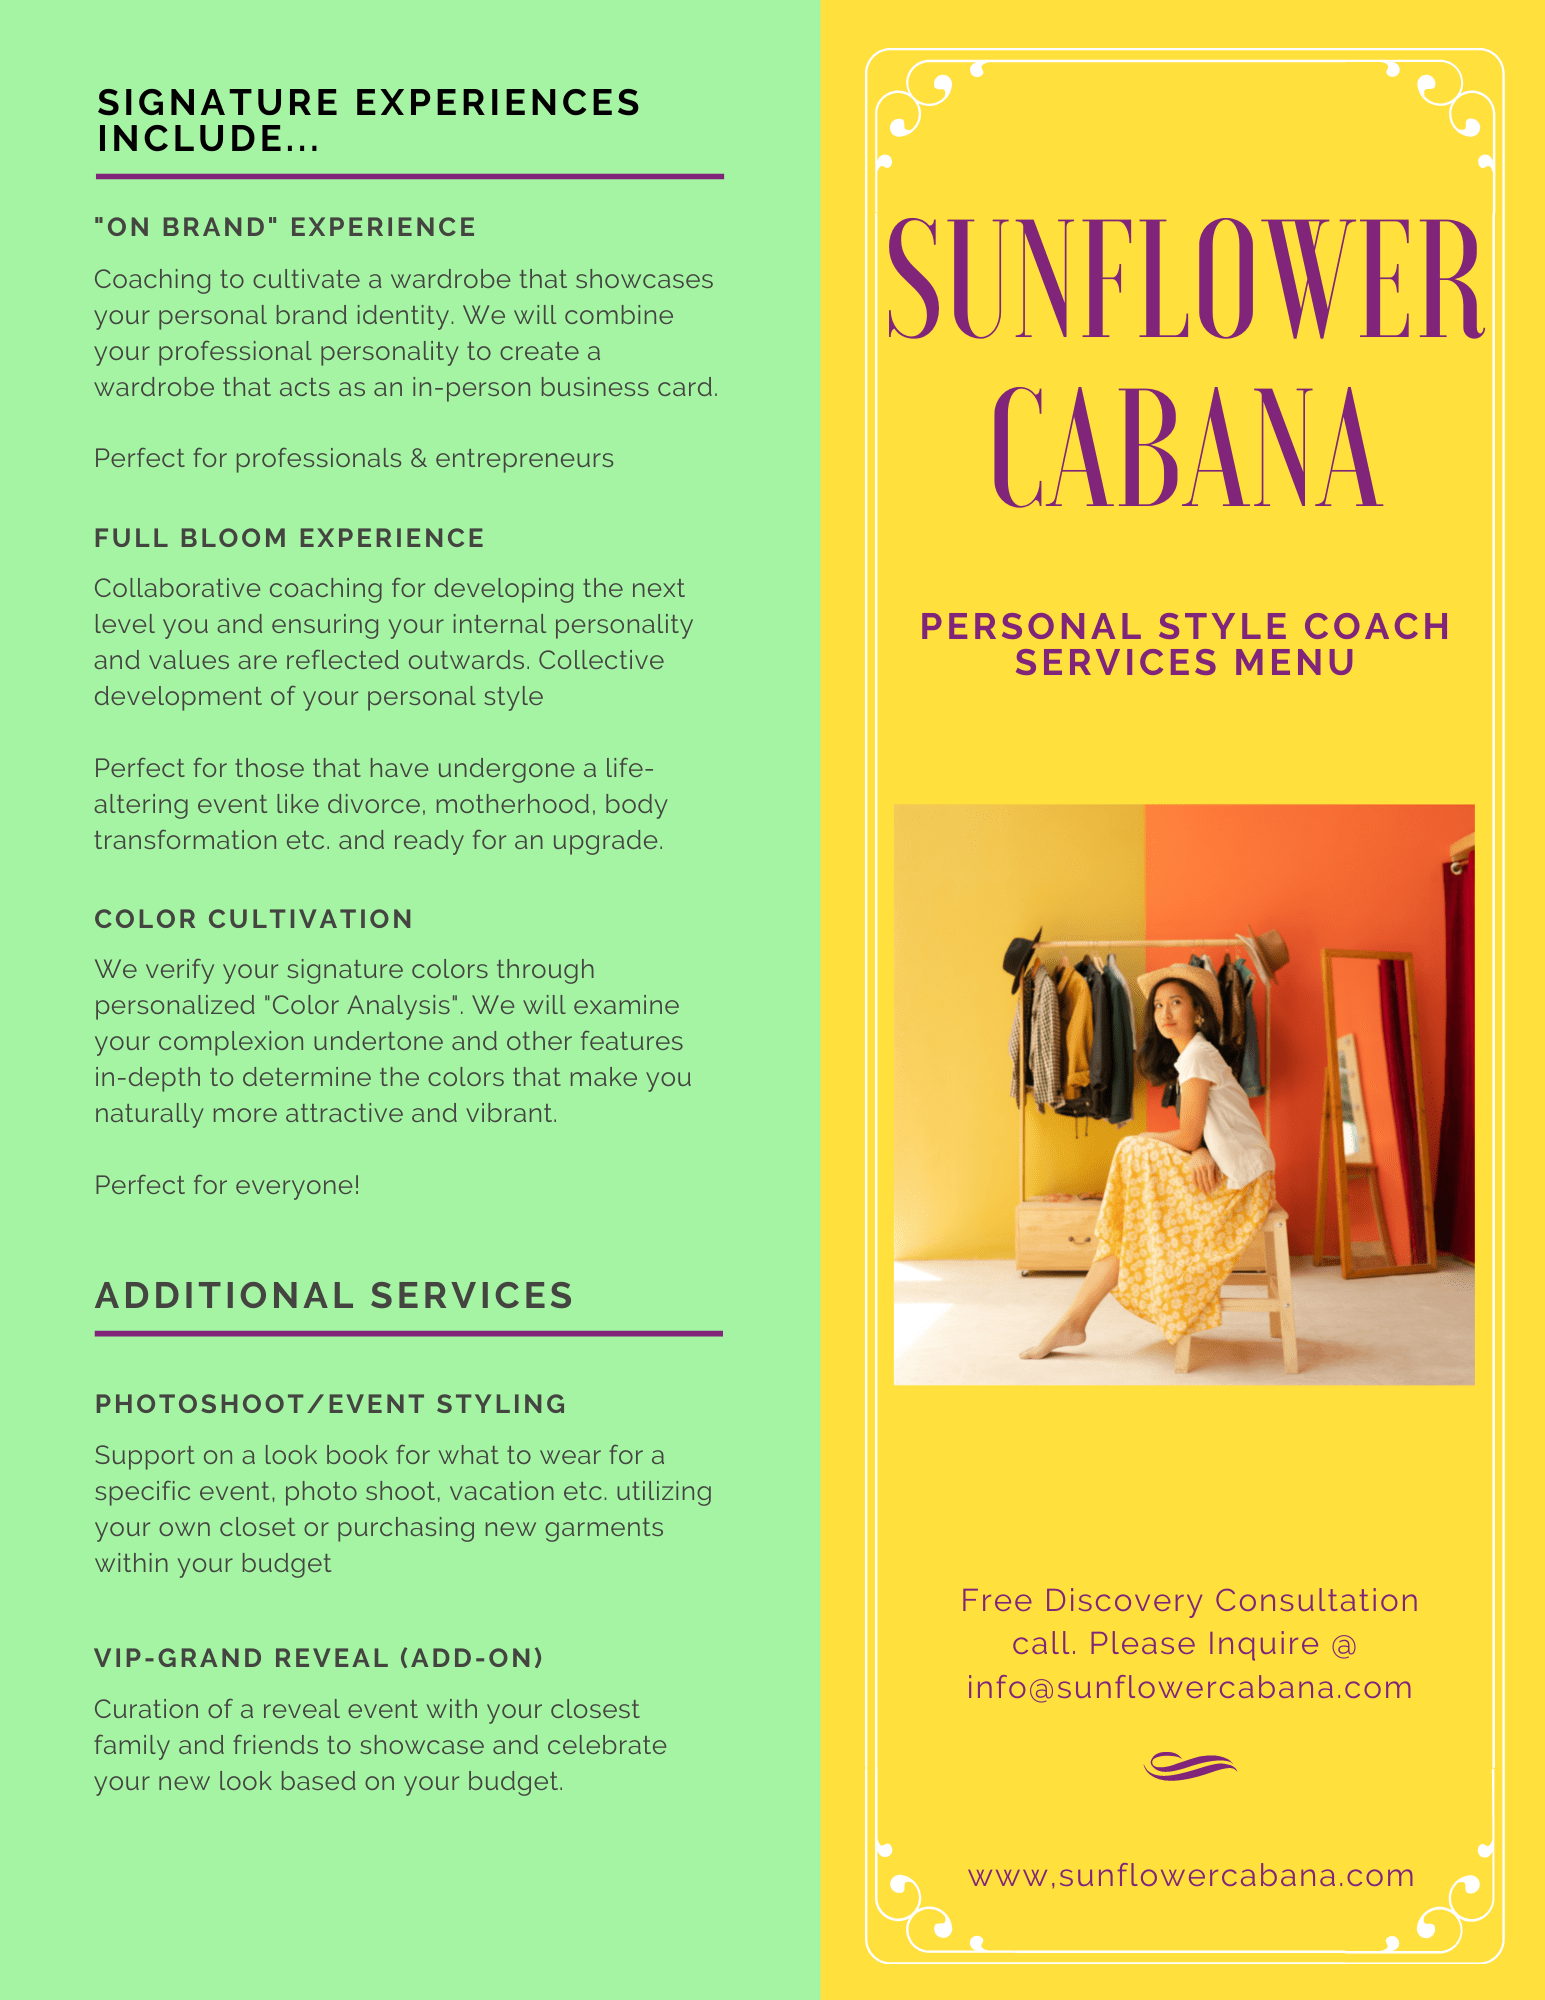 Free 15 Minute Consultation Call - Sunflower Cabana